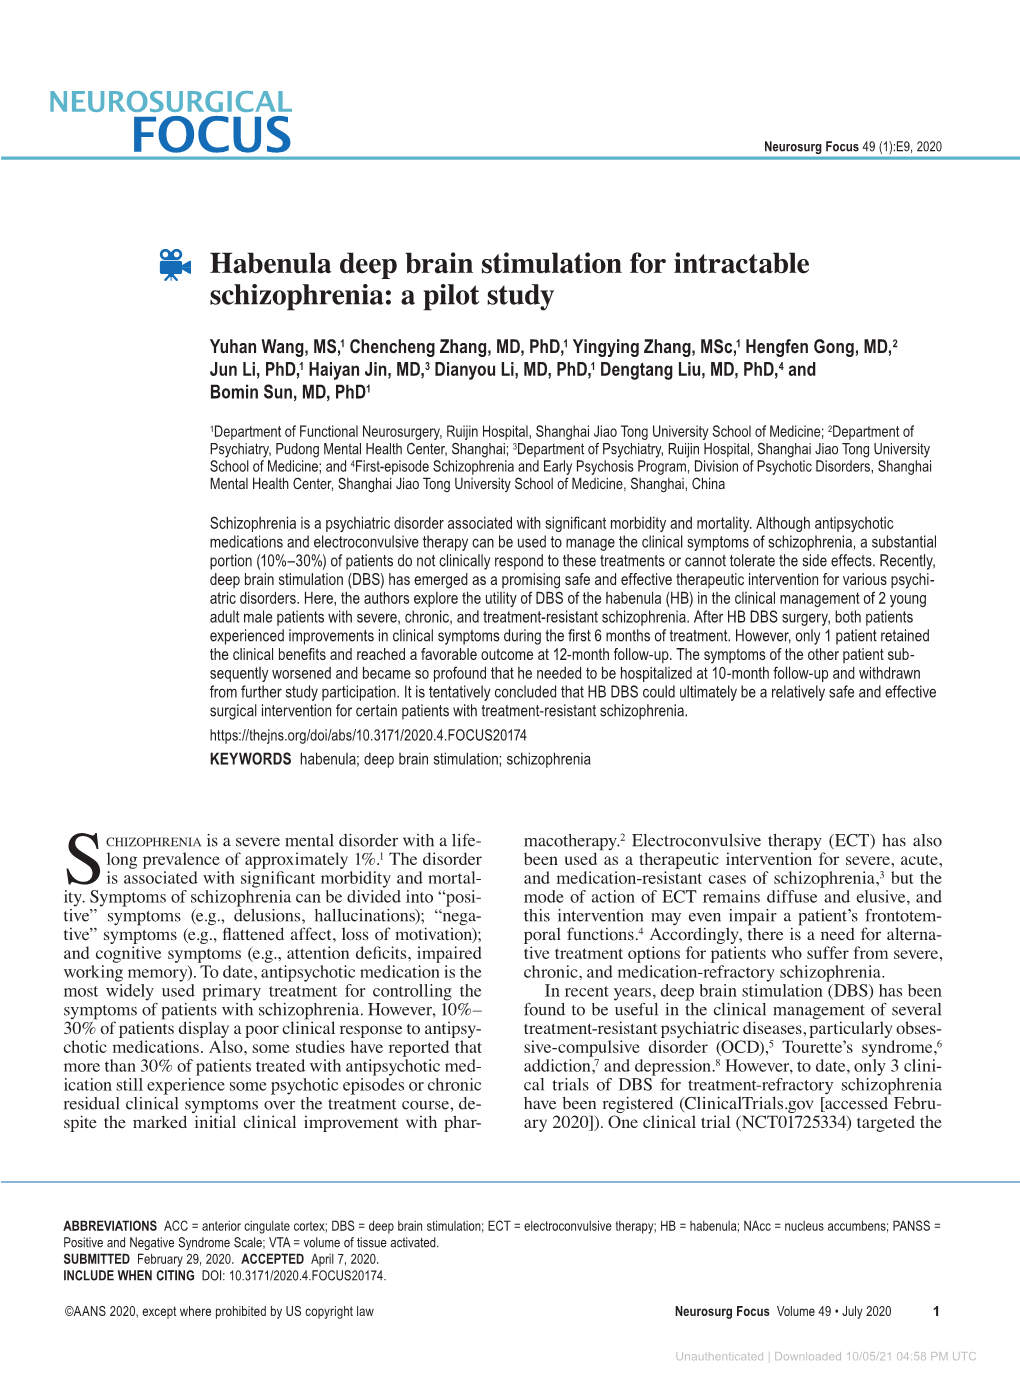 Habenula Deep Brain Stimulation for Intractable Schizophrenia: a Pilot Study